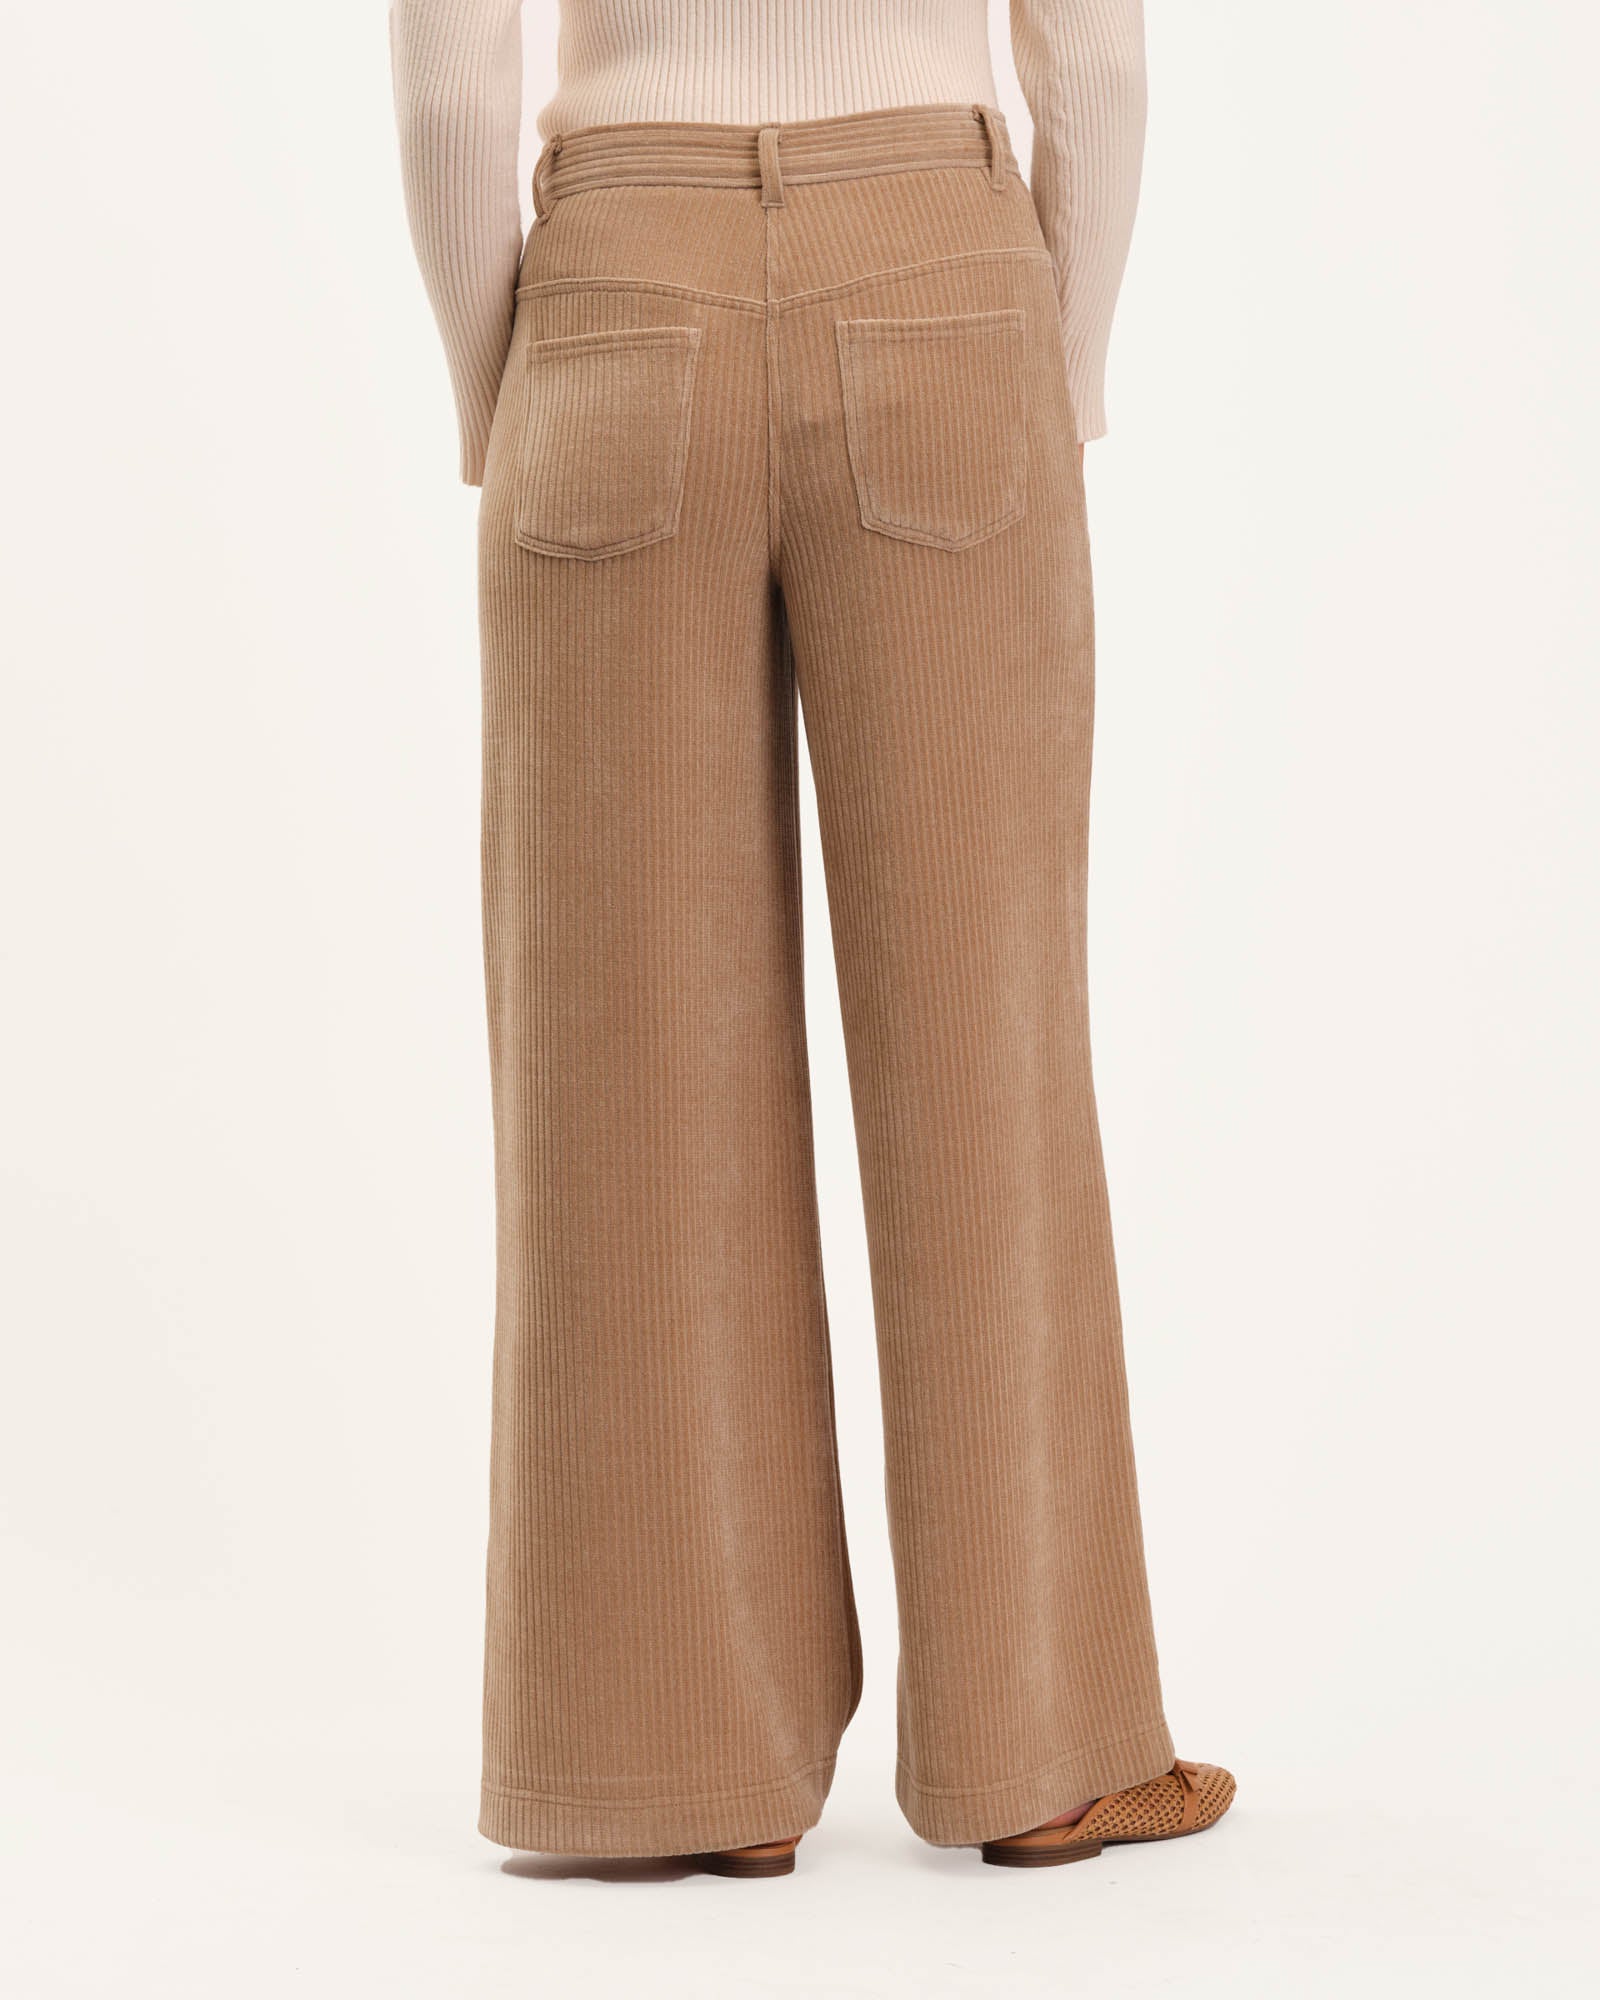 Long beige two-tone high-waist corduroy pants - Compañía Fantástica